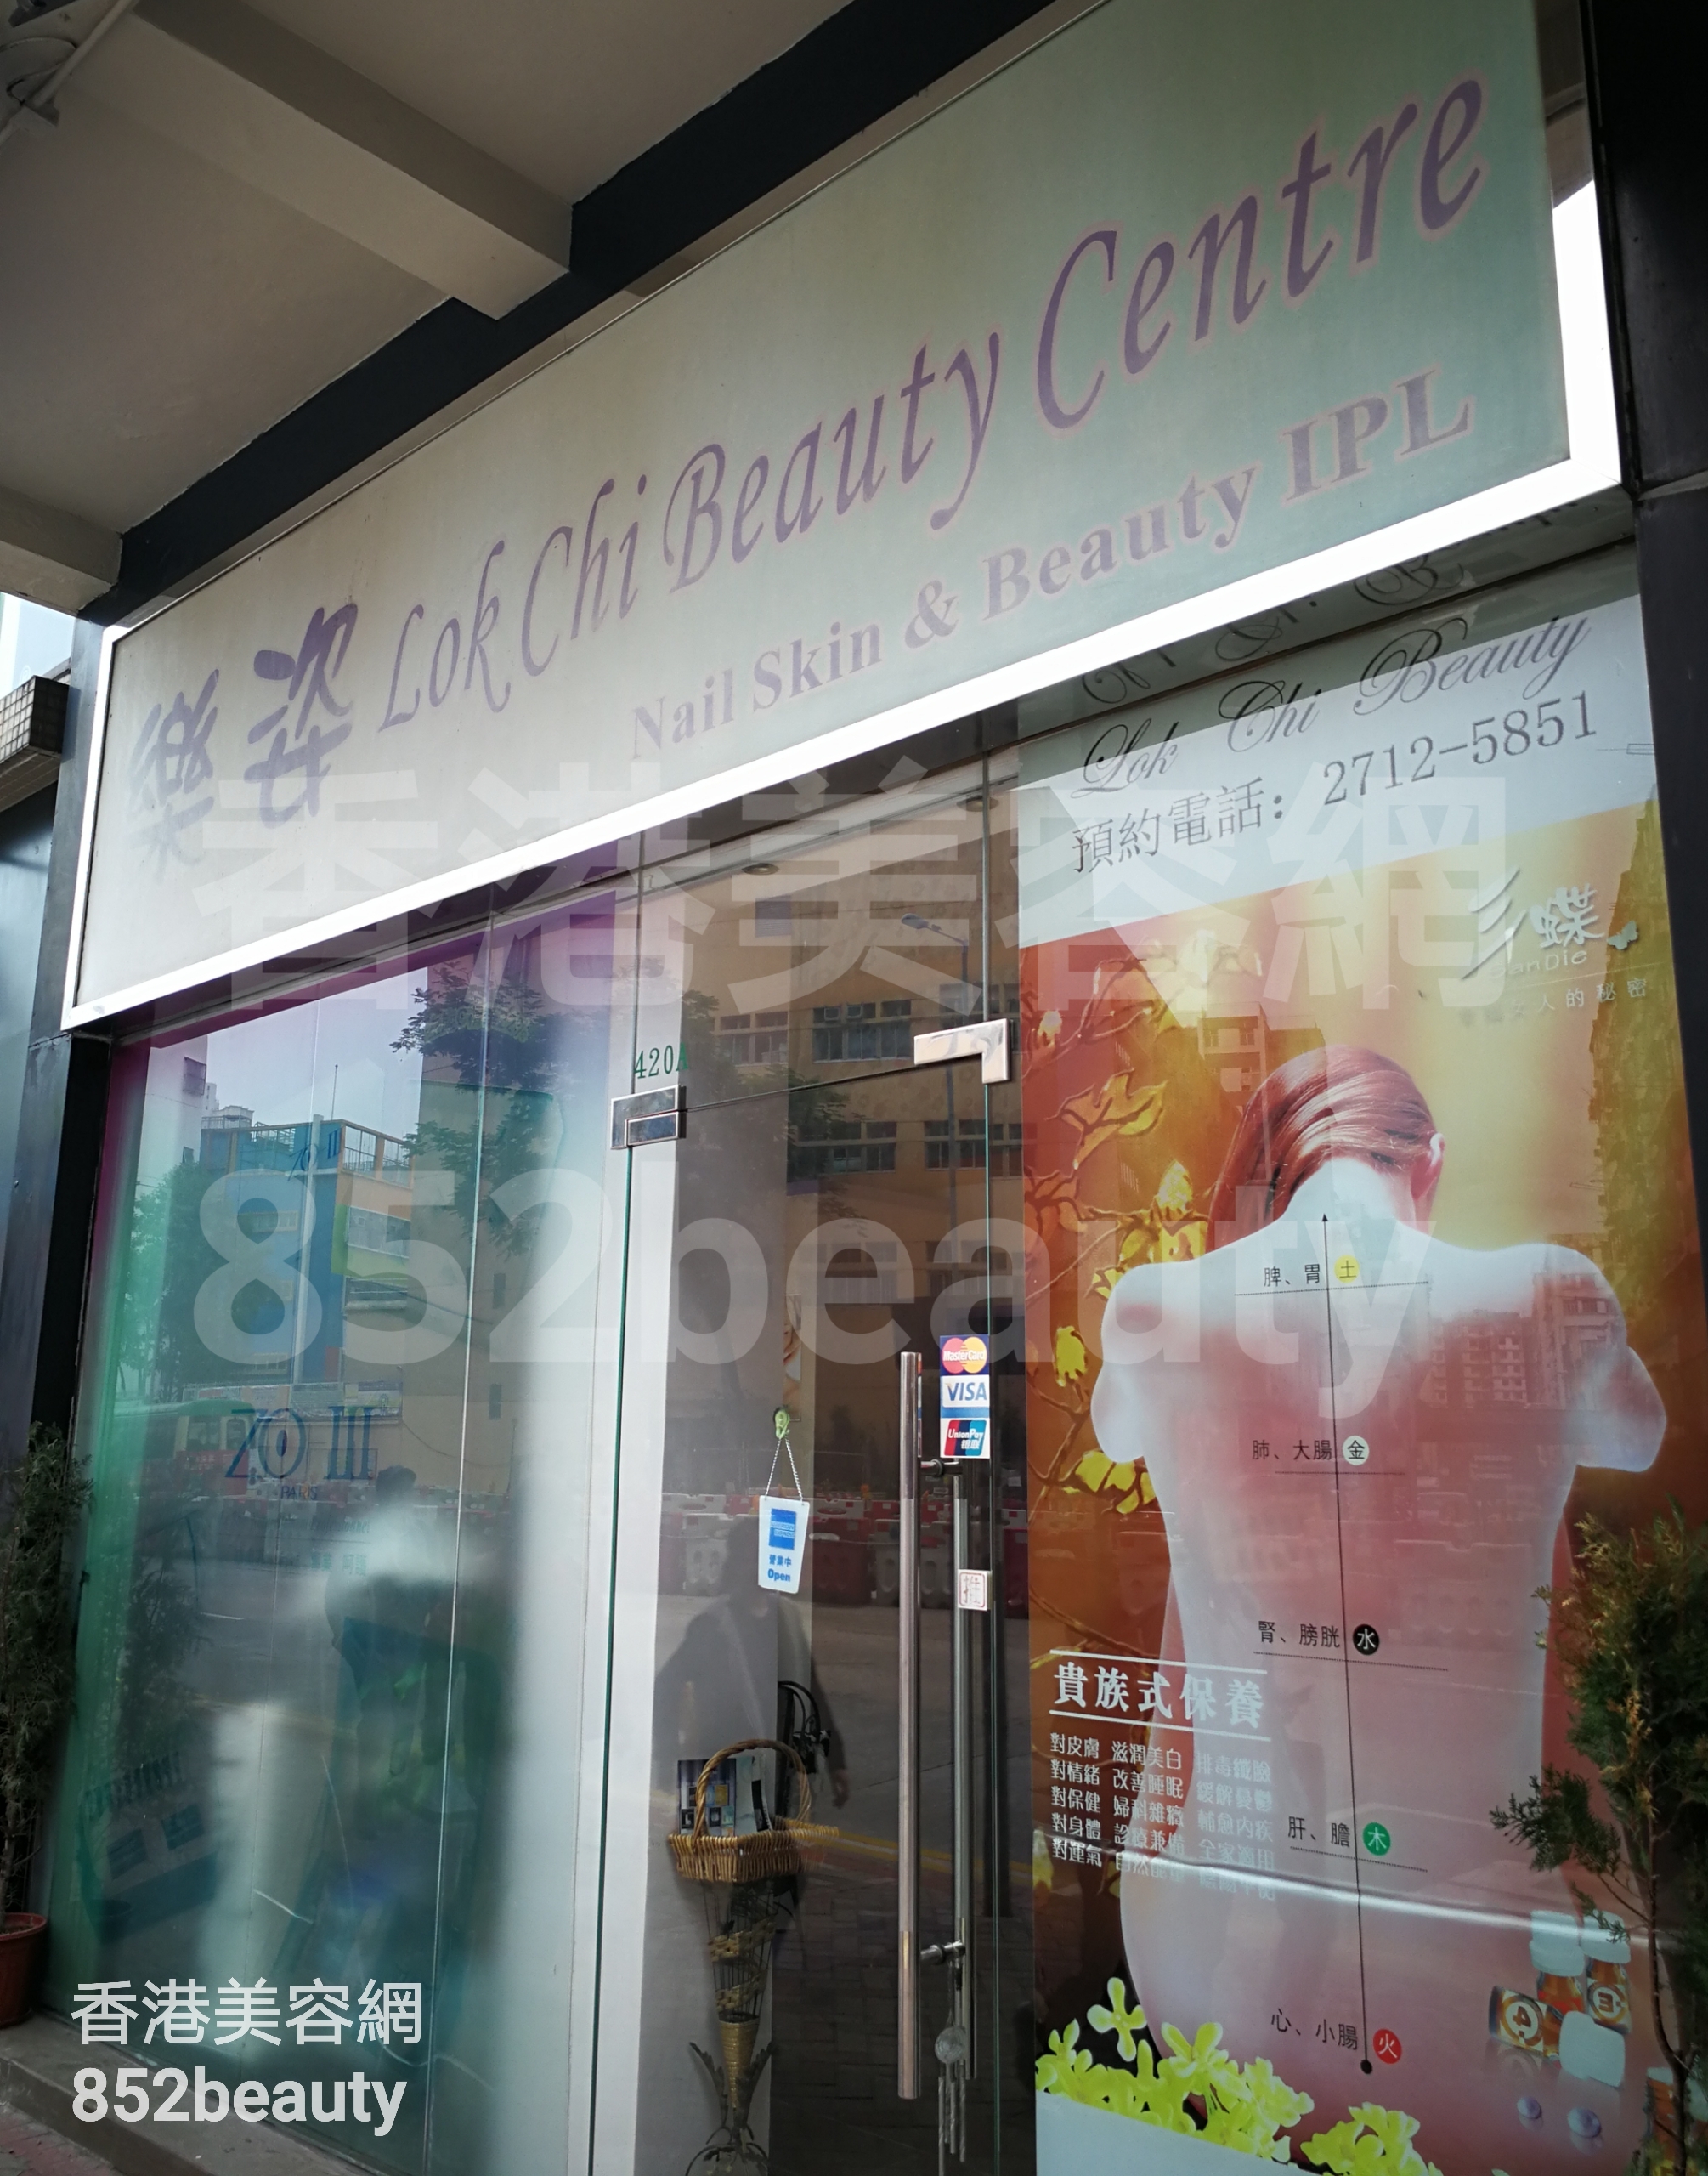 香港美容網 Hong Kong Beauty Salon 美容院 / 美容師: 樂姿 Lok Chi Beauty Centre